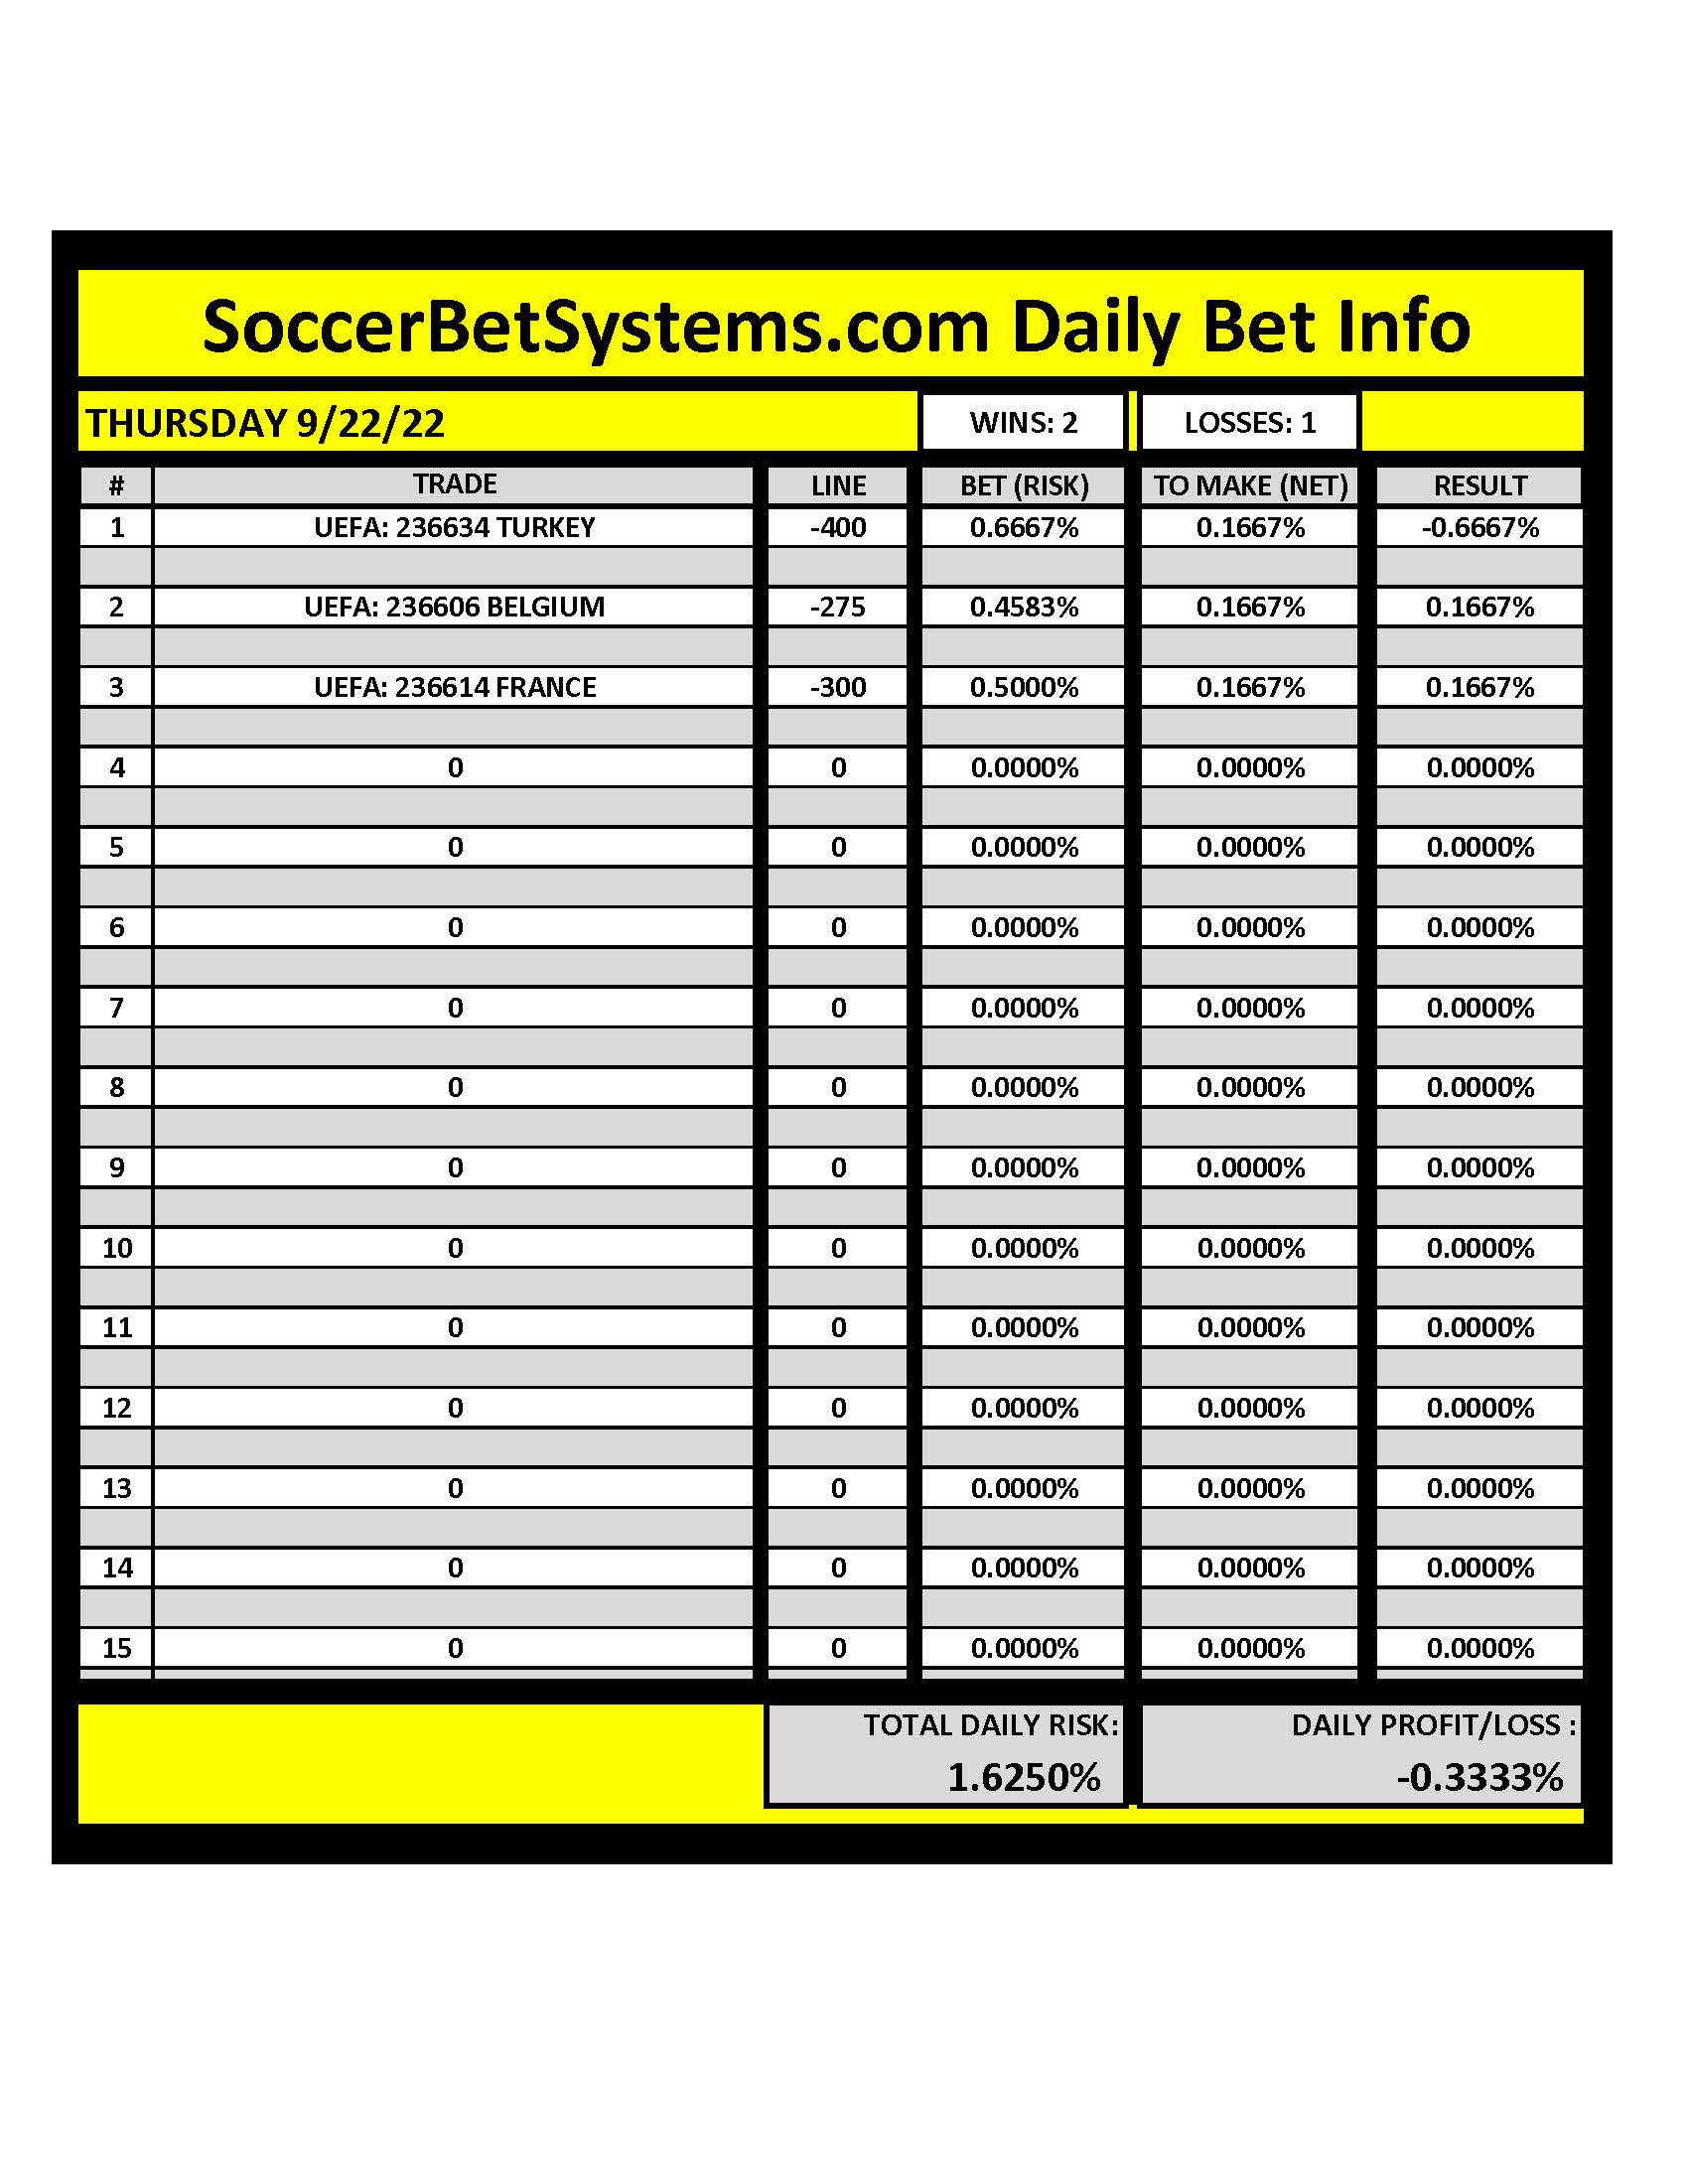 SoccerBetSystems.com 9/22/22 Daily Results